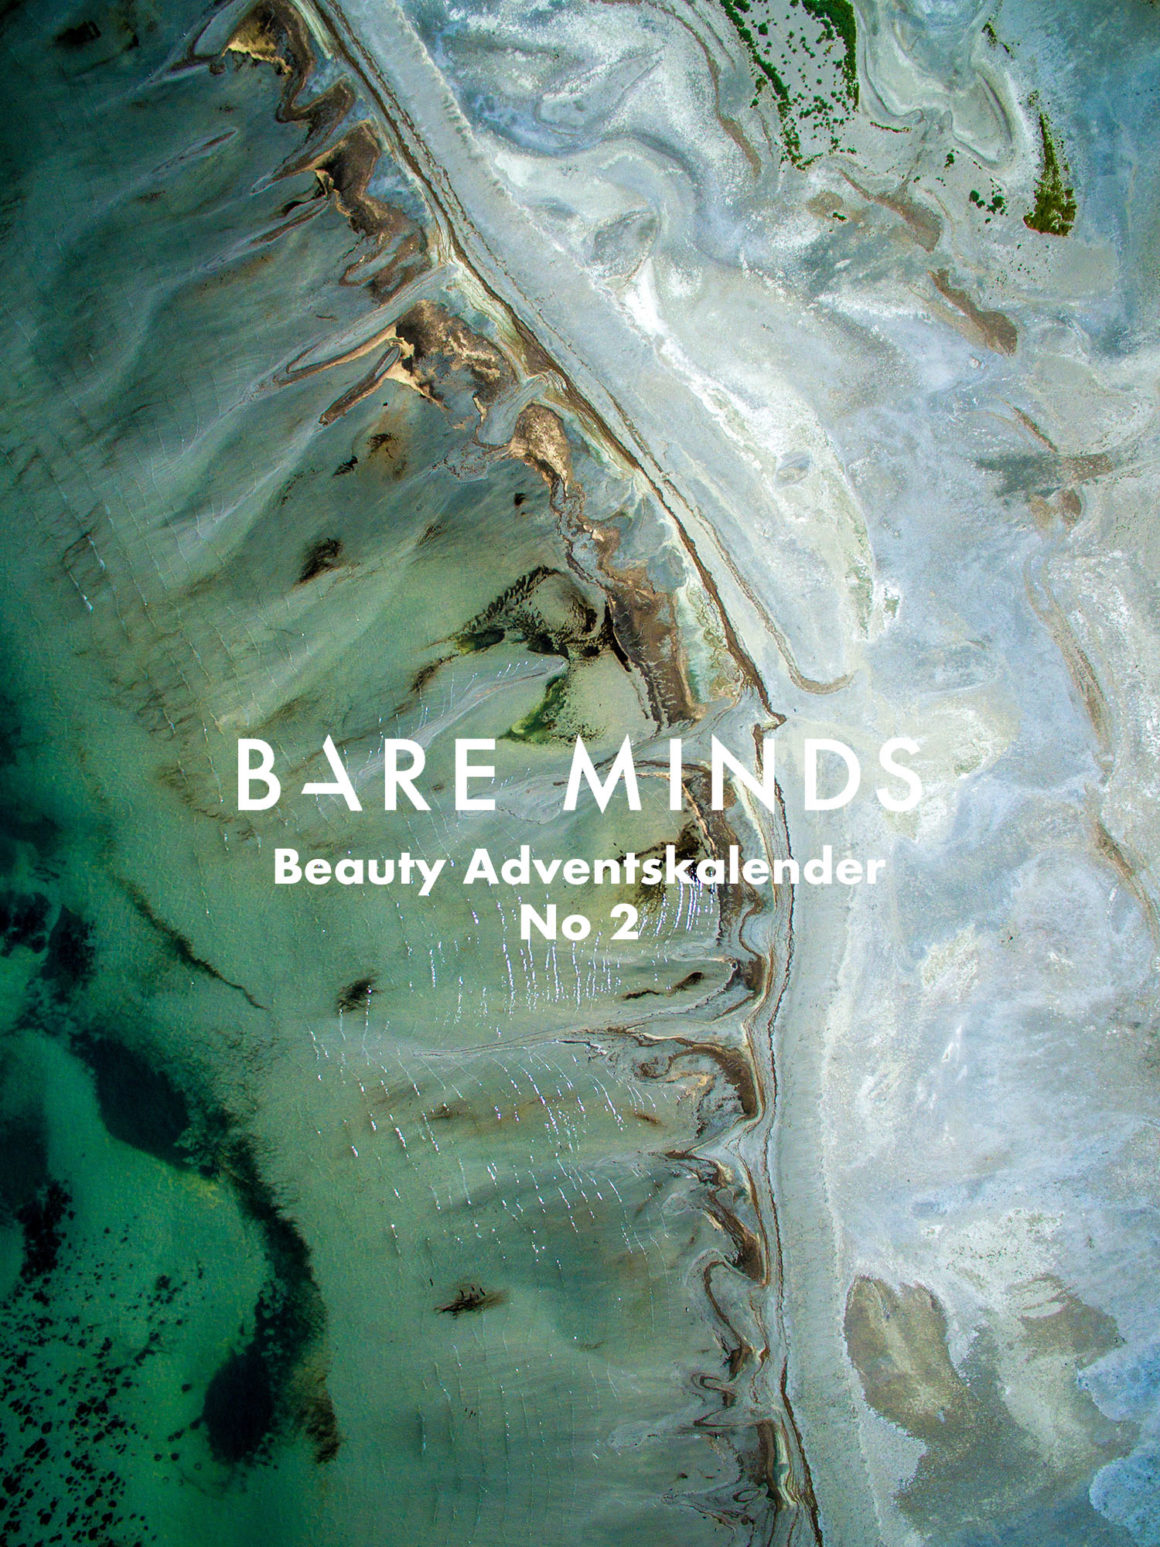 Beauty Adventskalender 2018 Rahua Bare Minds matt-howard-185299-unsplash